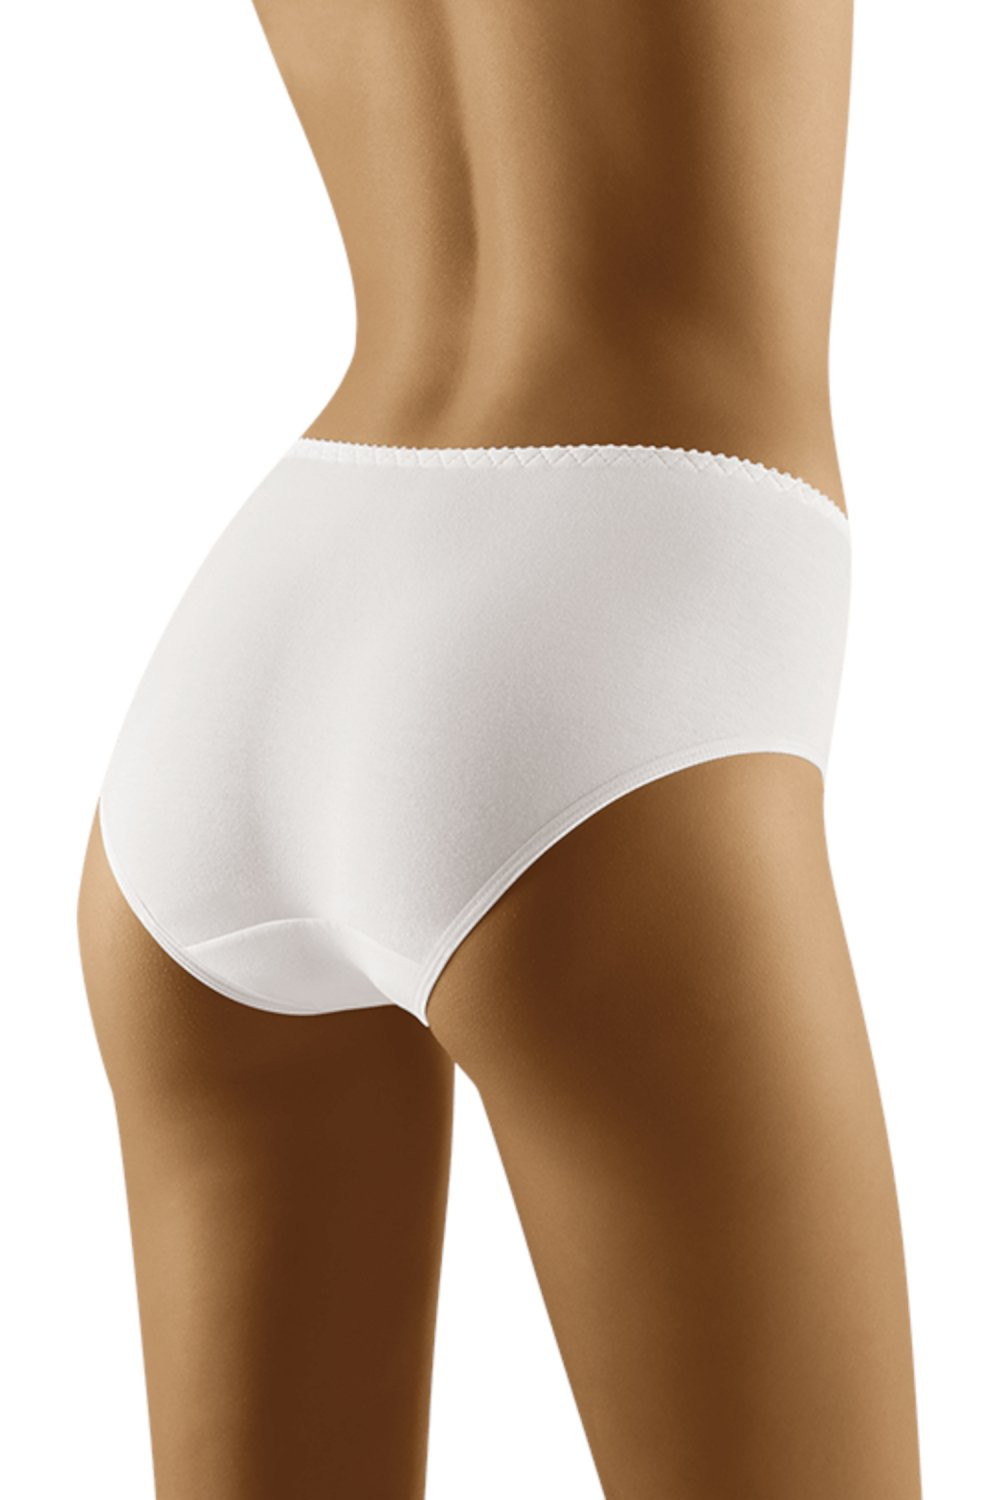 Dámské kalhotky model 17734250 white WOLBAR Bílá XL - Wol-Bar